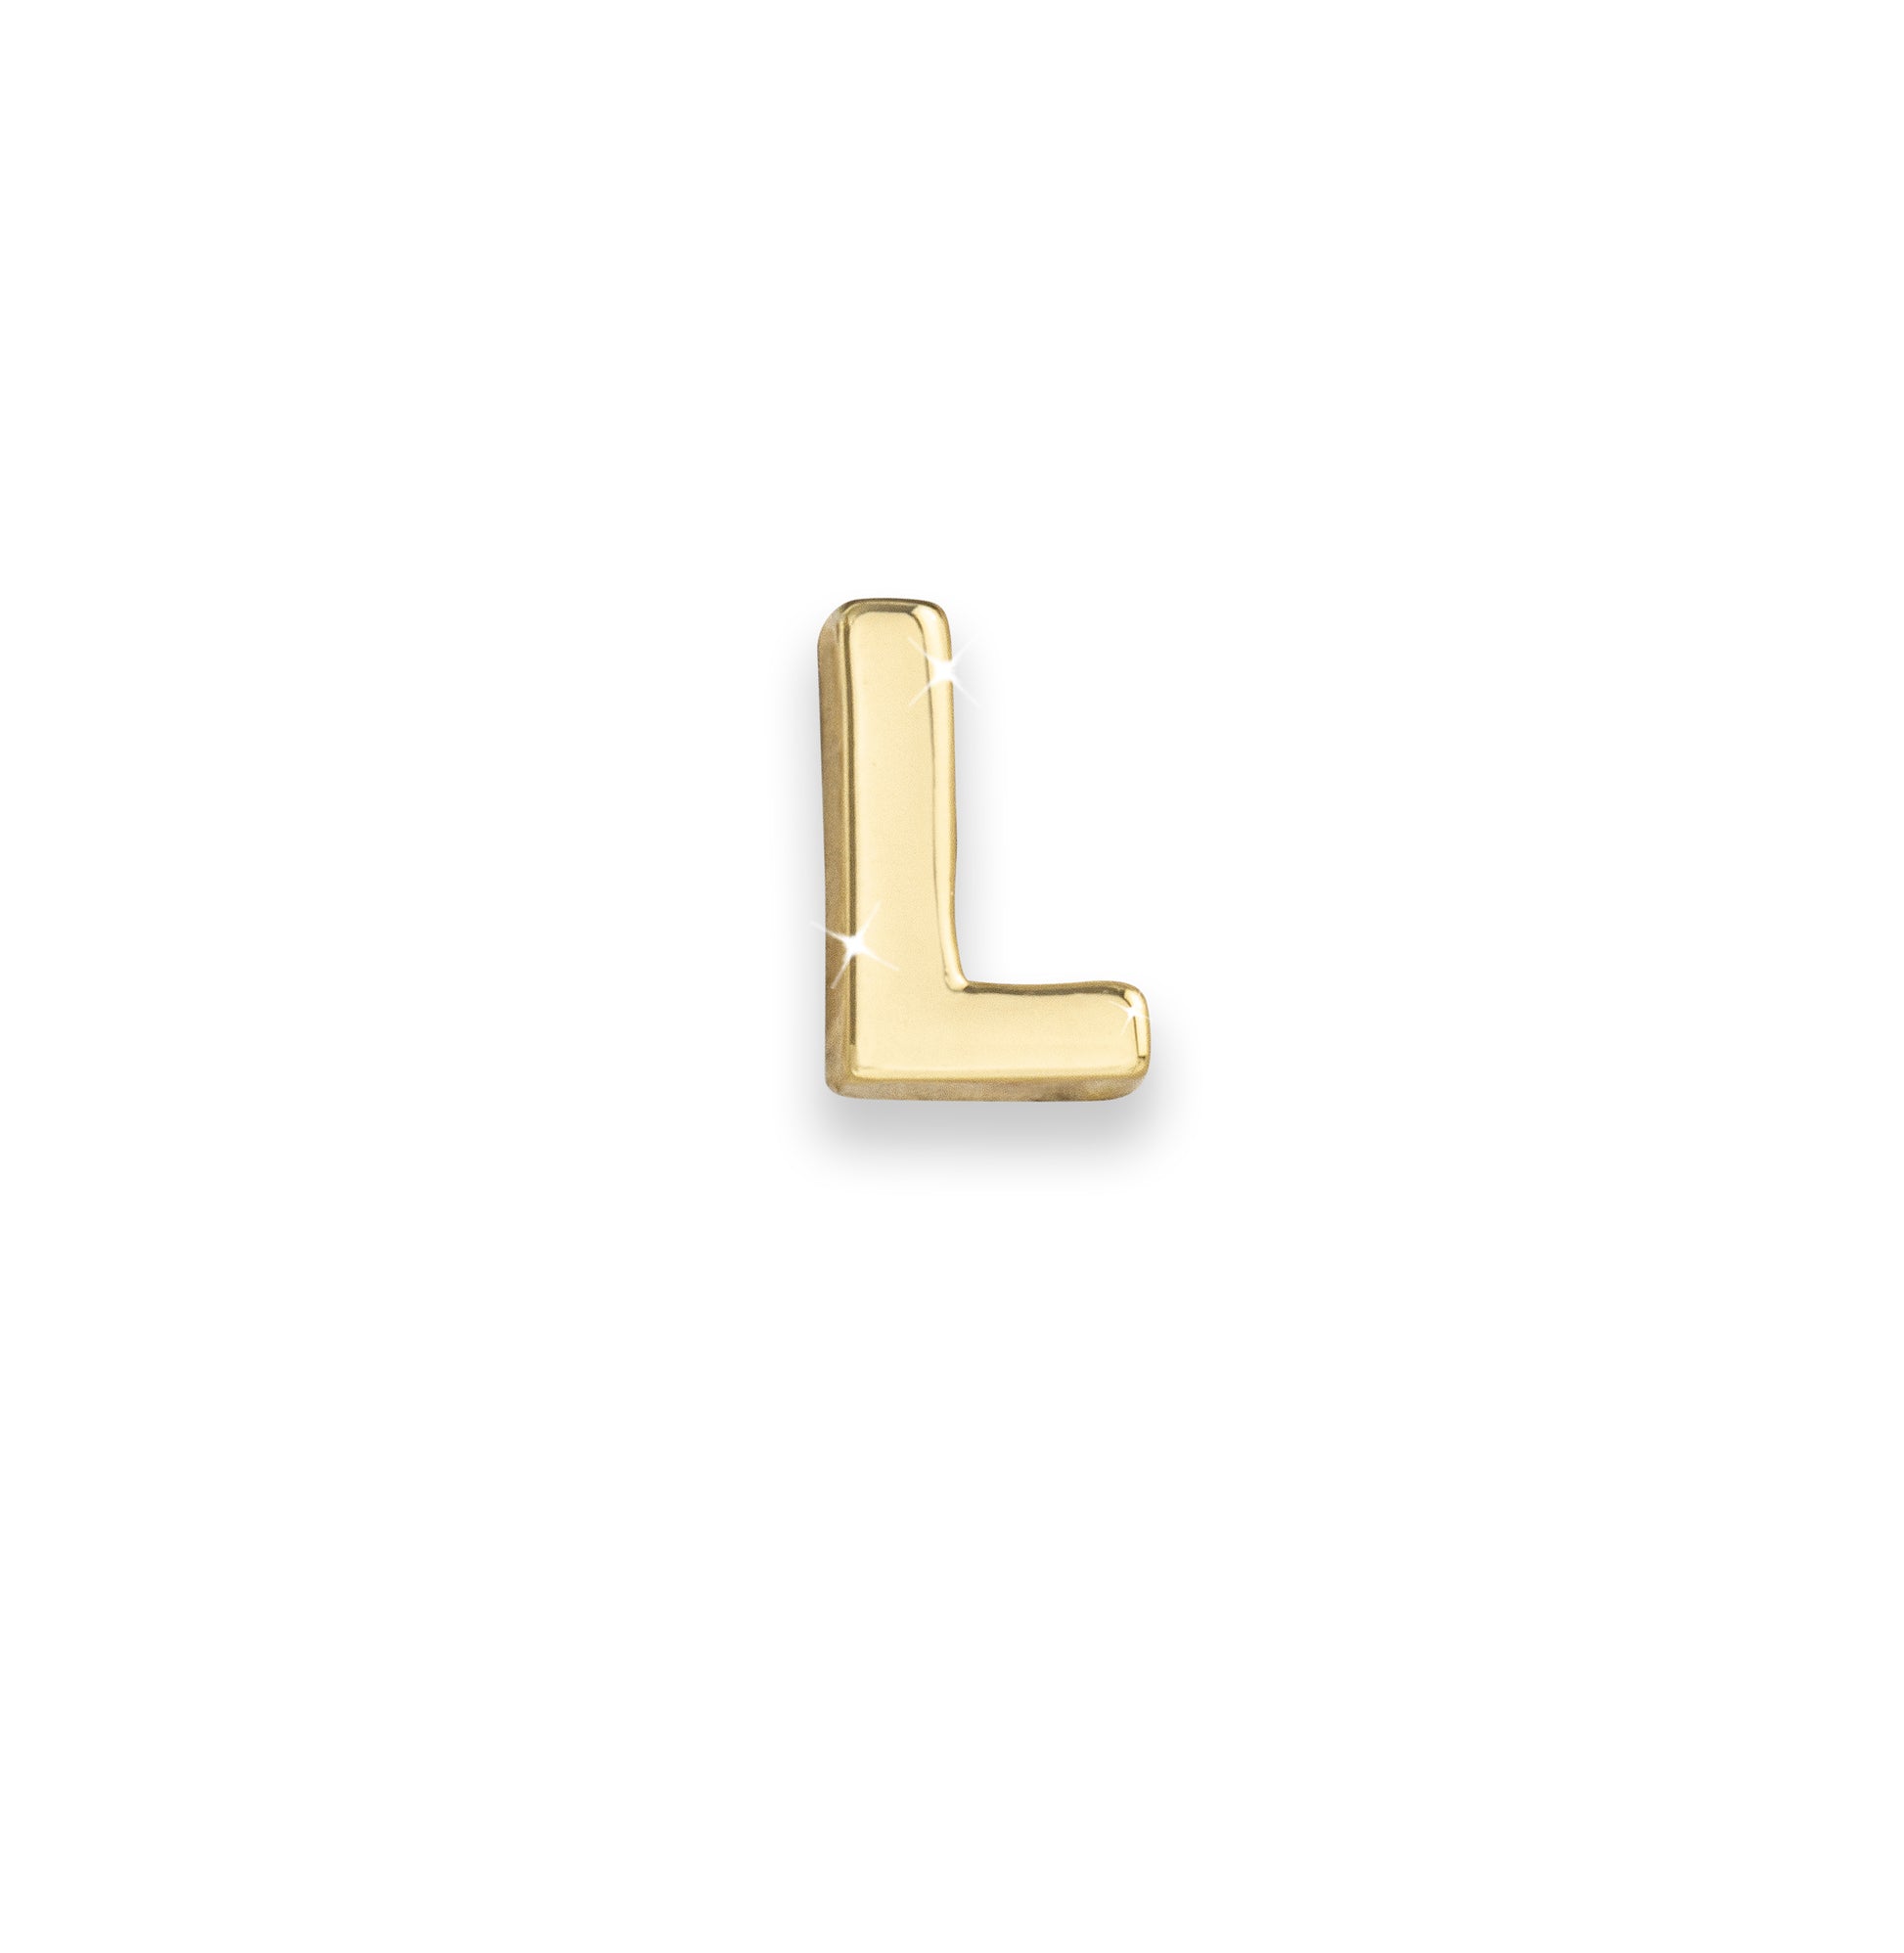 Gold letter L monogram charm for necklaces & bracelets